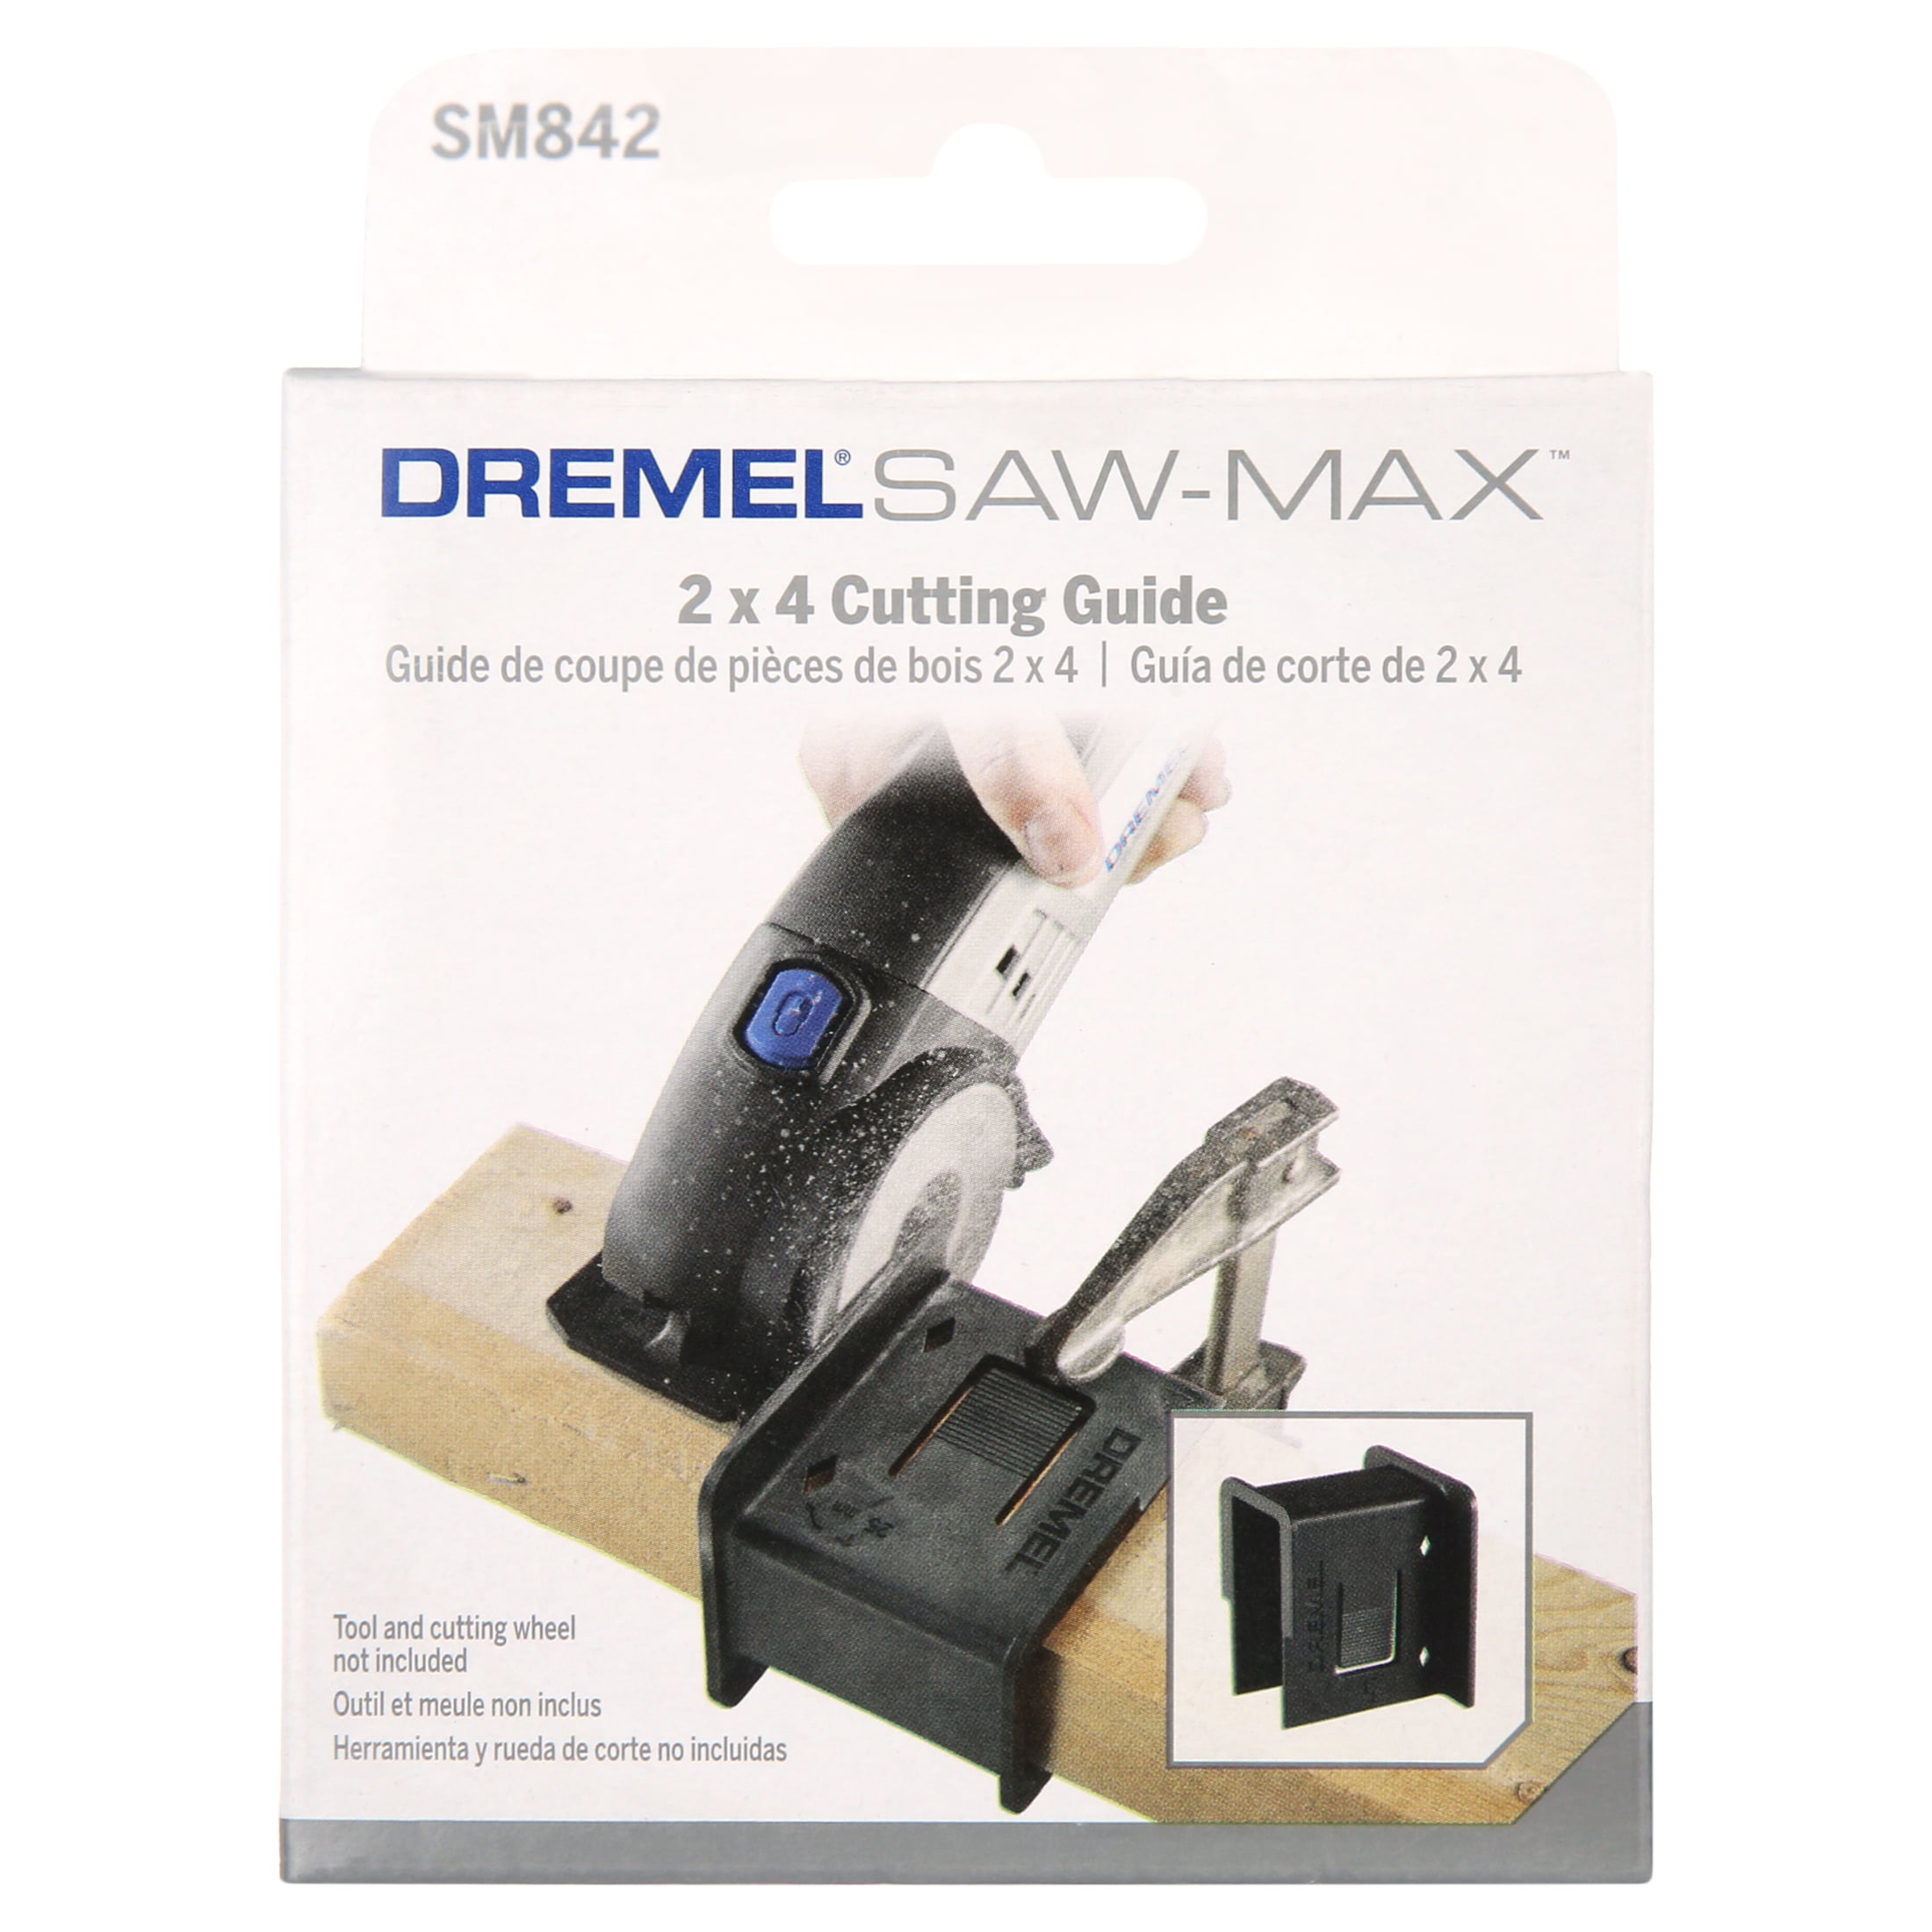 Dremel Saw-Max SM842 2 by 4 Cutting Guide 